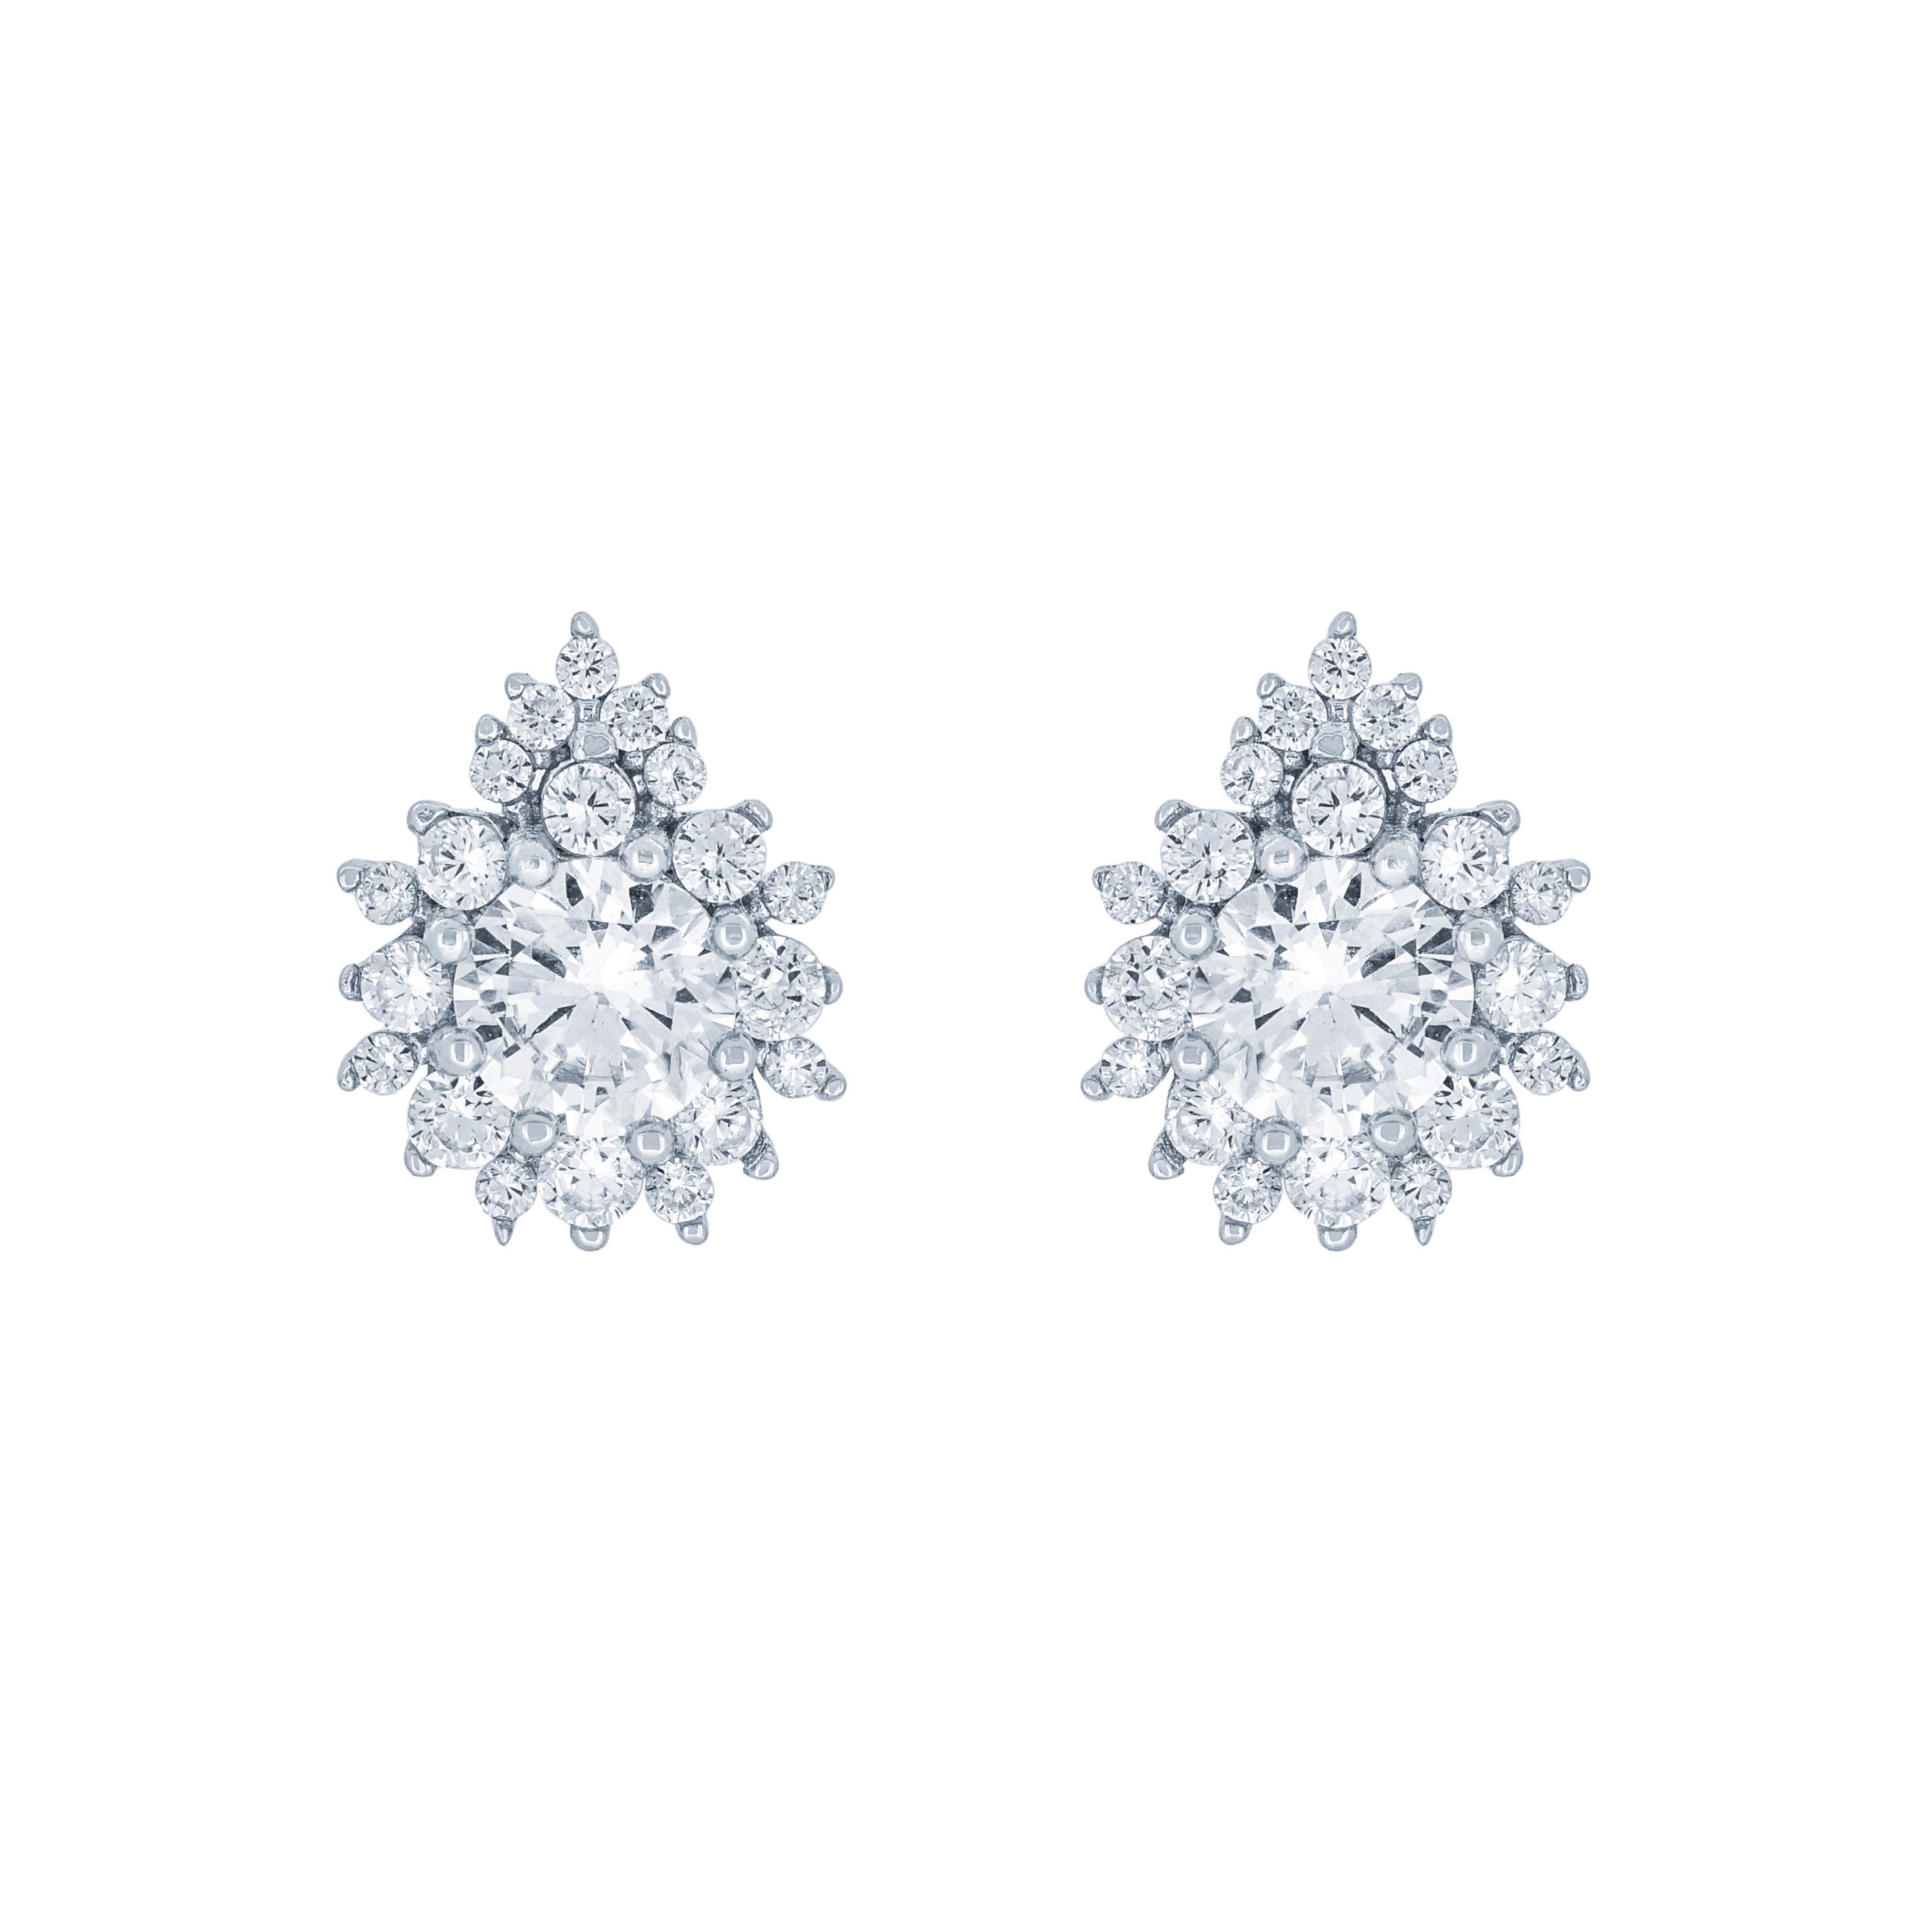 (100096) White Cubic Zirconia Stud Earrings In Sterling Silver